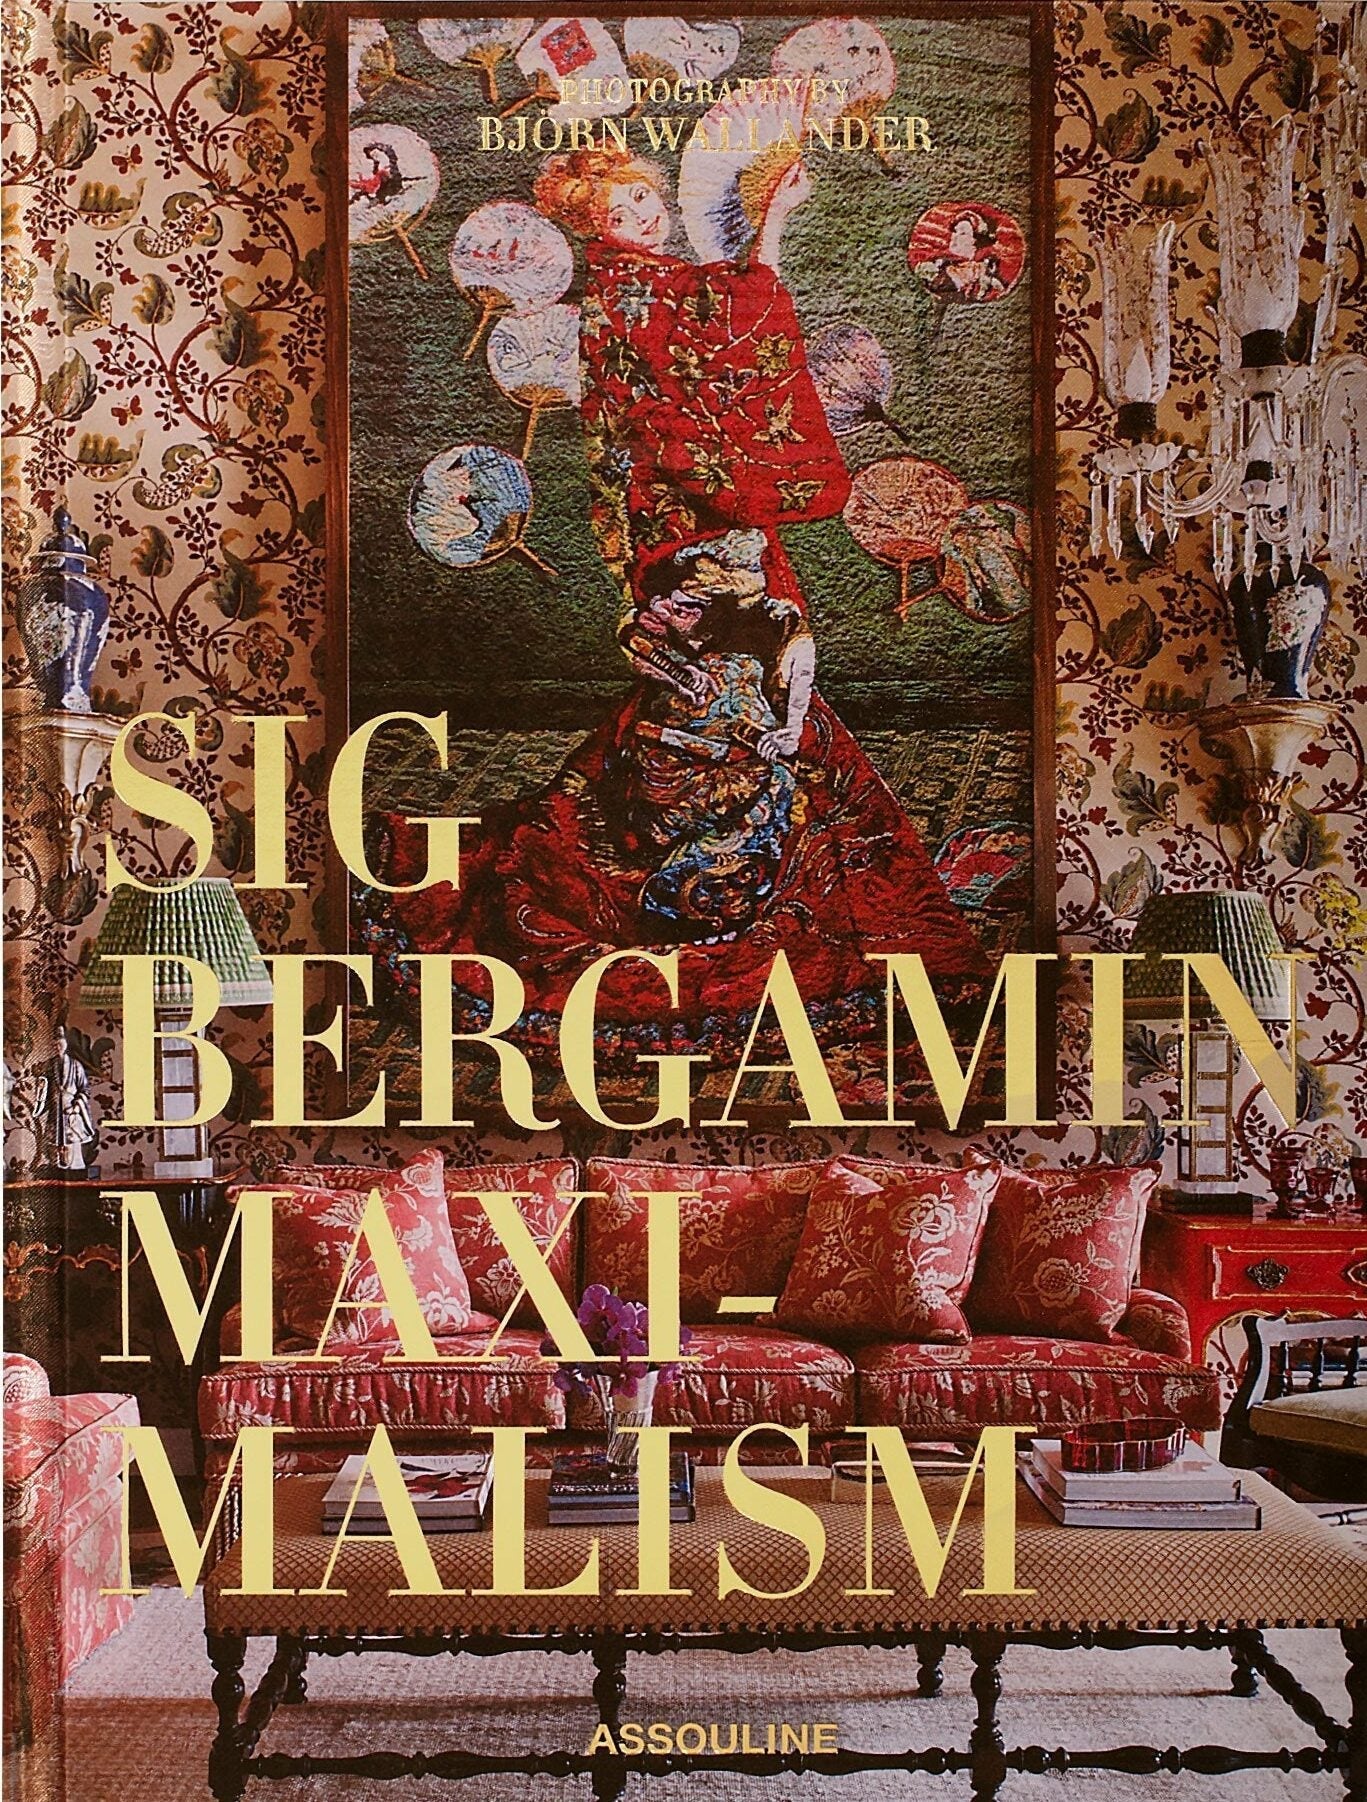 Maksymalizm Assouline’a autorstwa Siga Bergamina